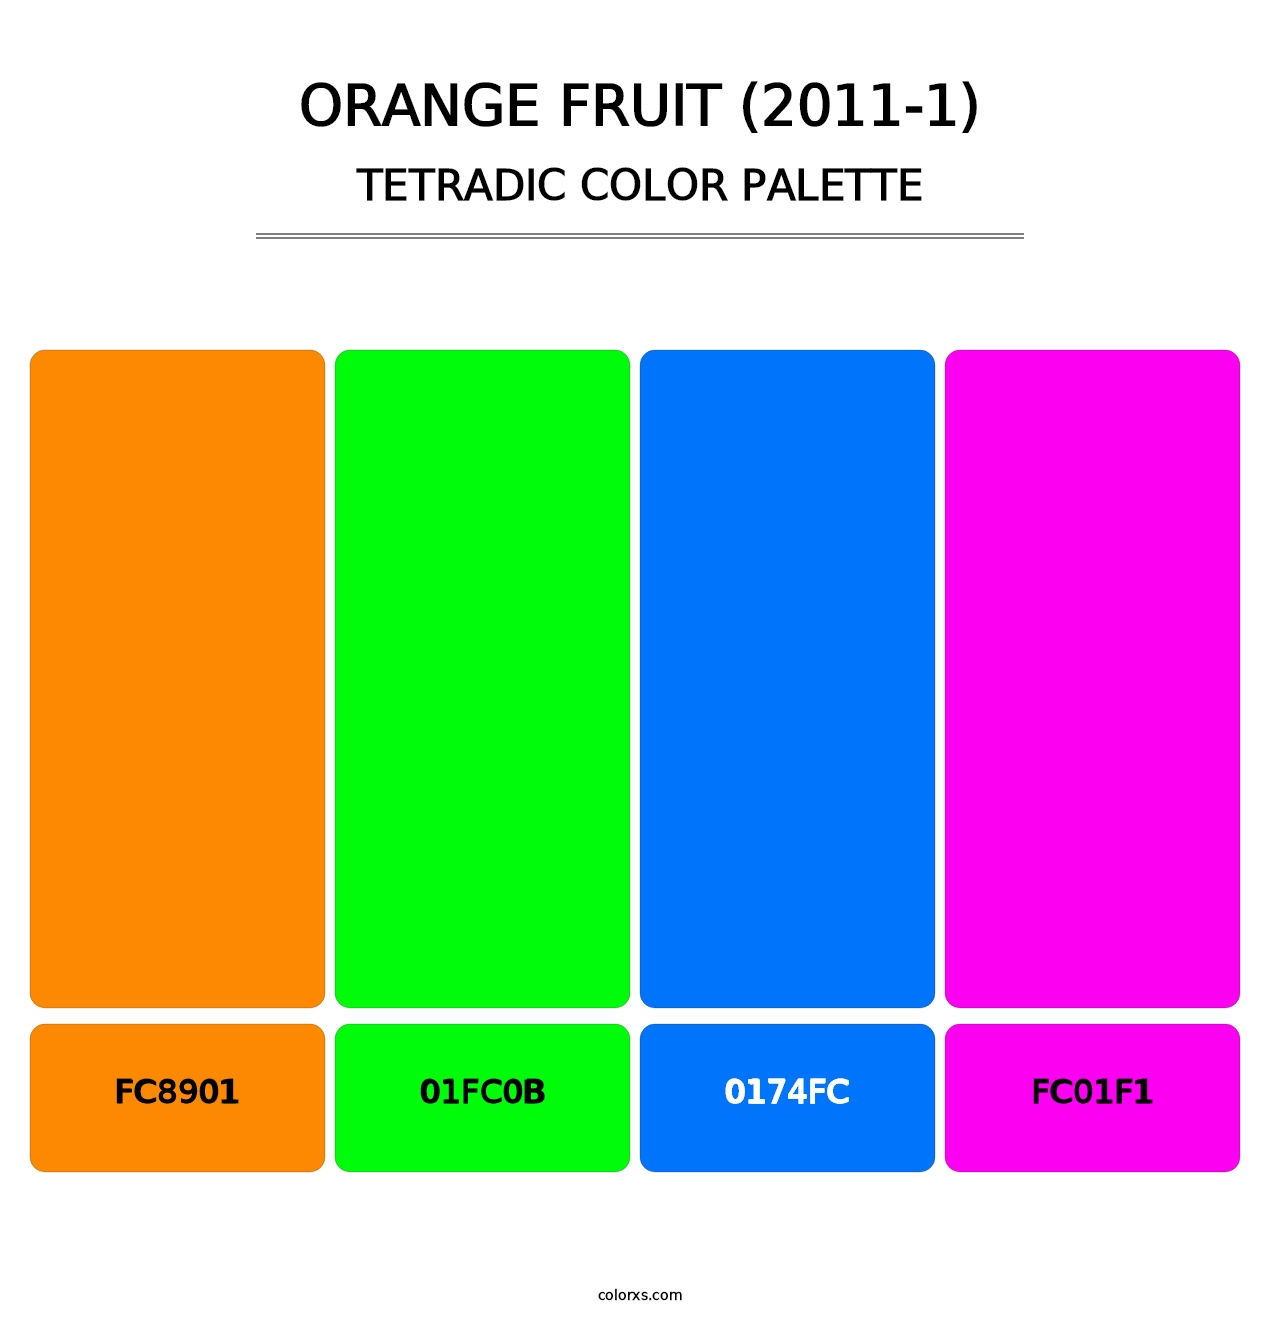 Orange Fruit (2011-1) - Tetradic Color Palette